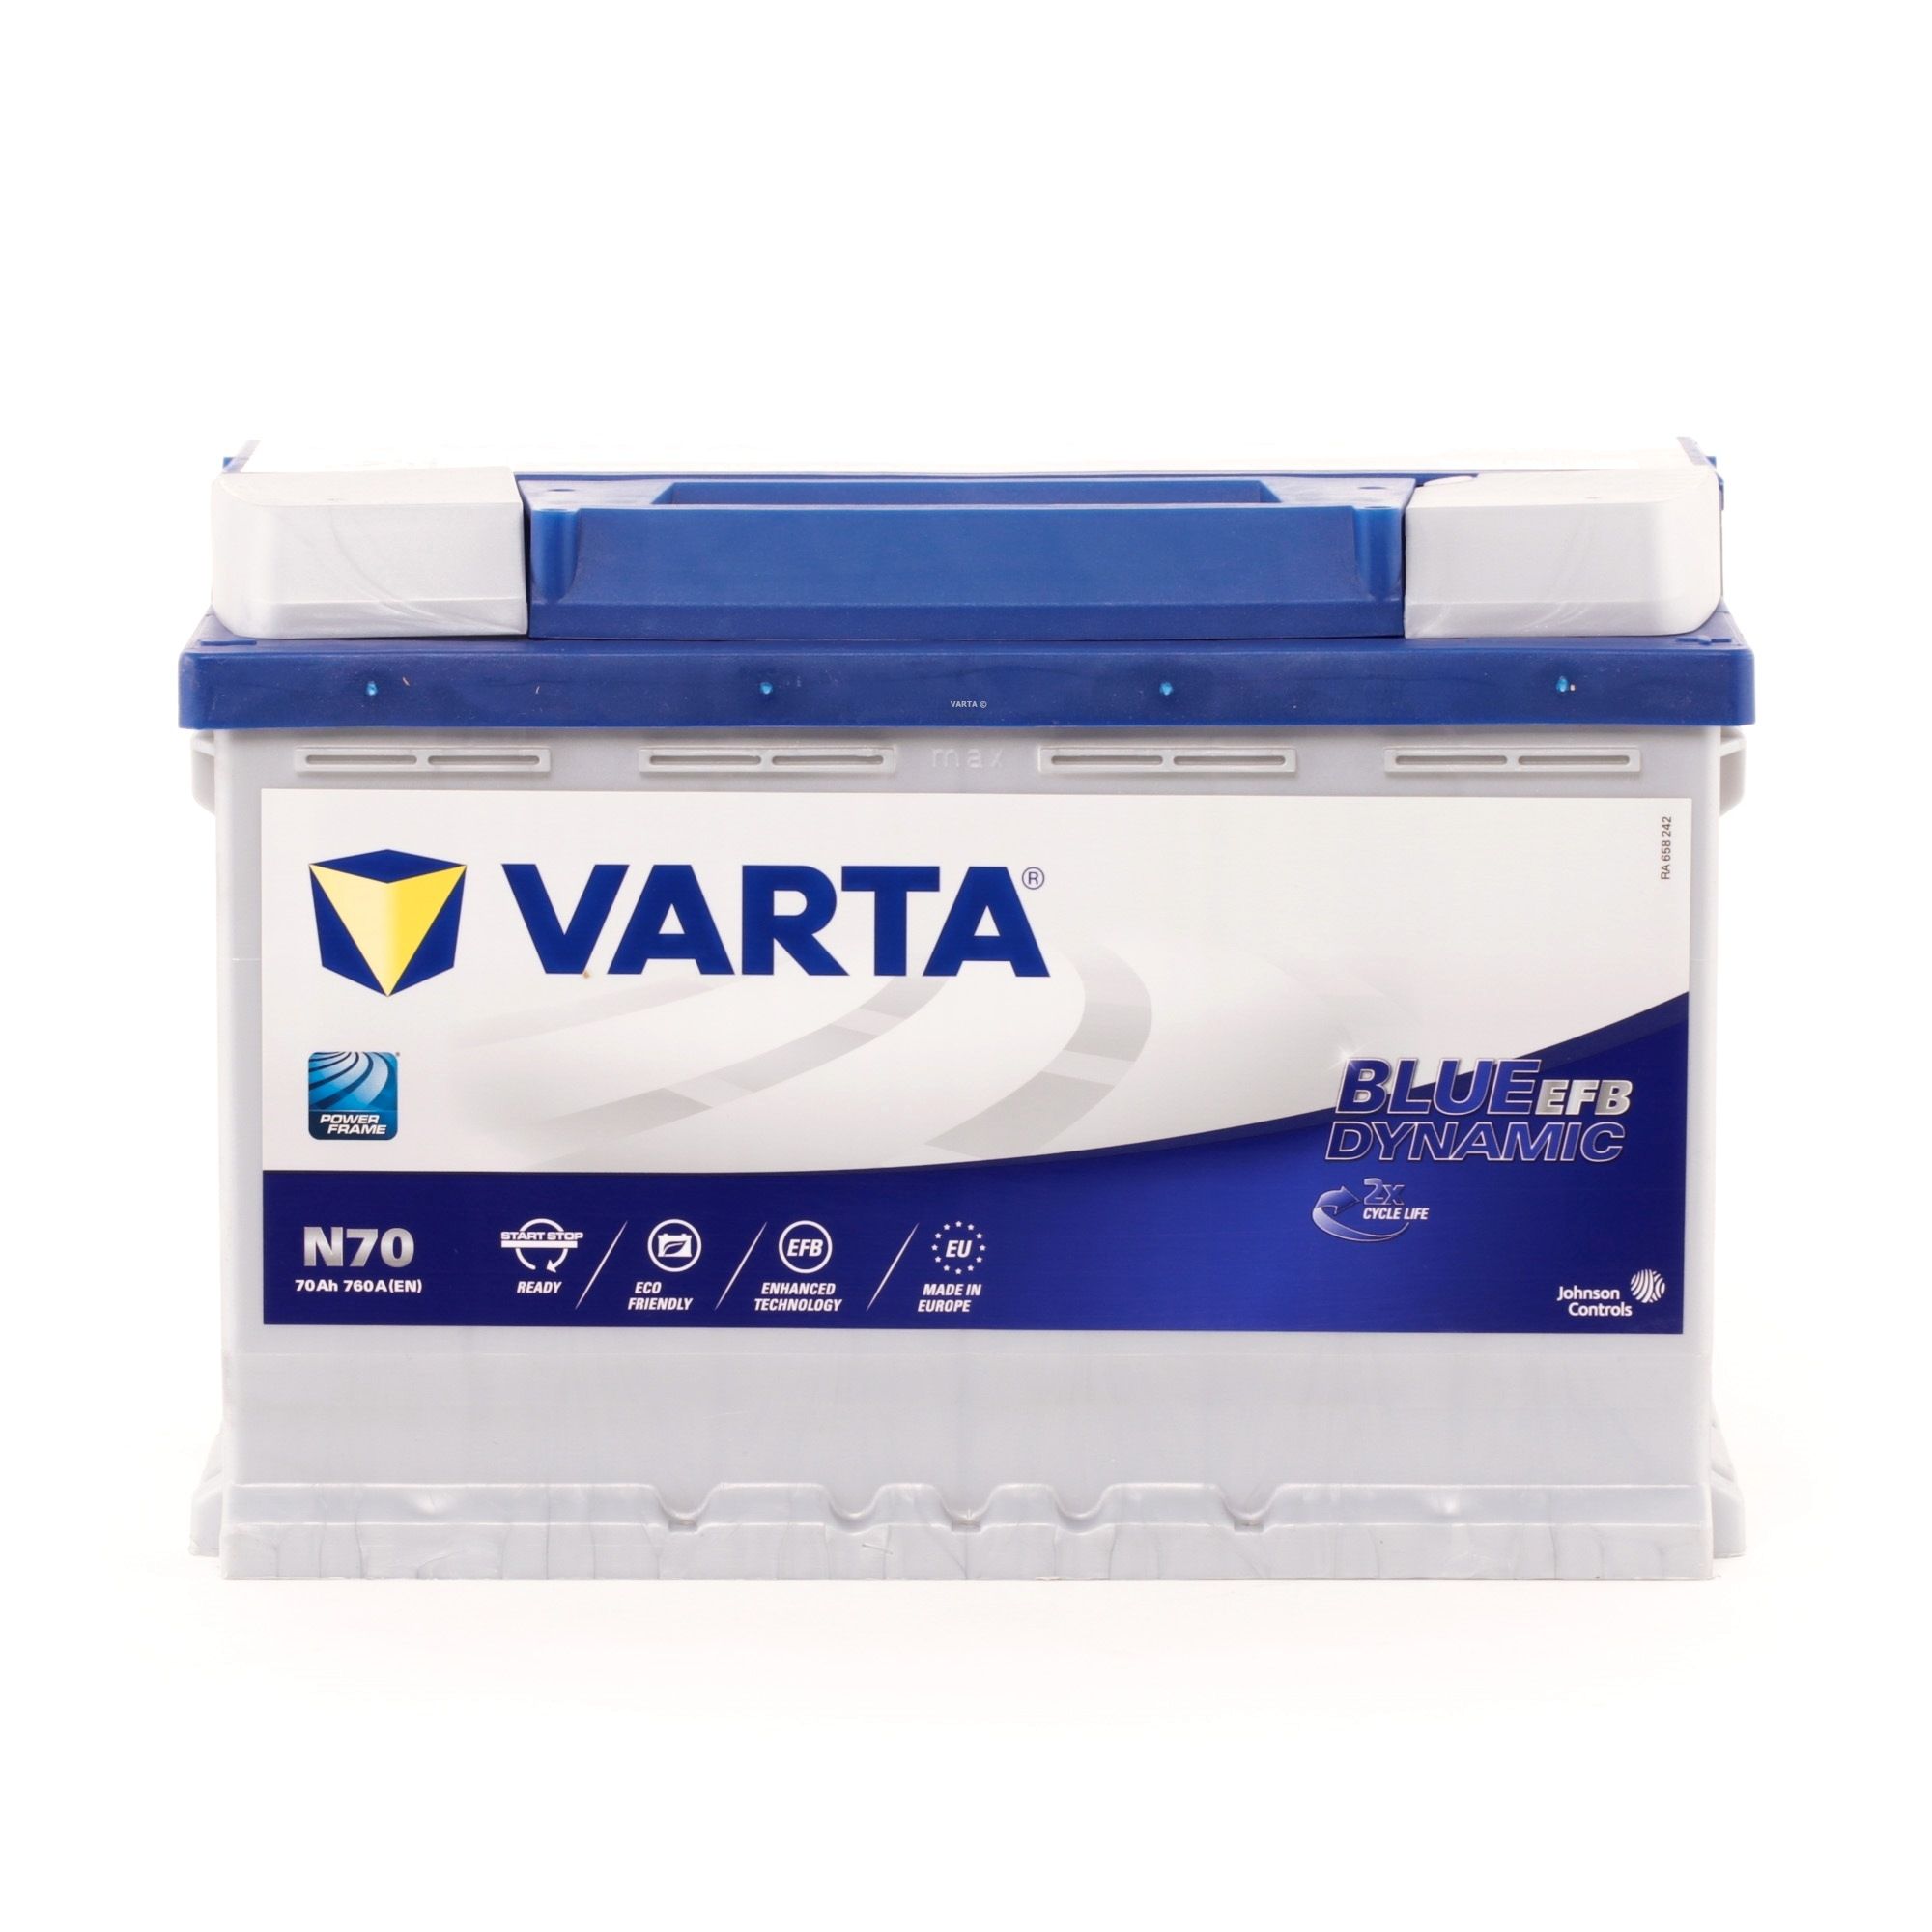 VARTA 570500076D842 originais SEAT Batería 12V 70Ah 760A B13 Bateria EFB